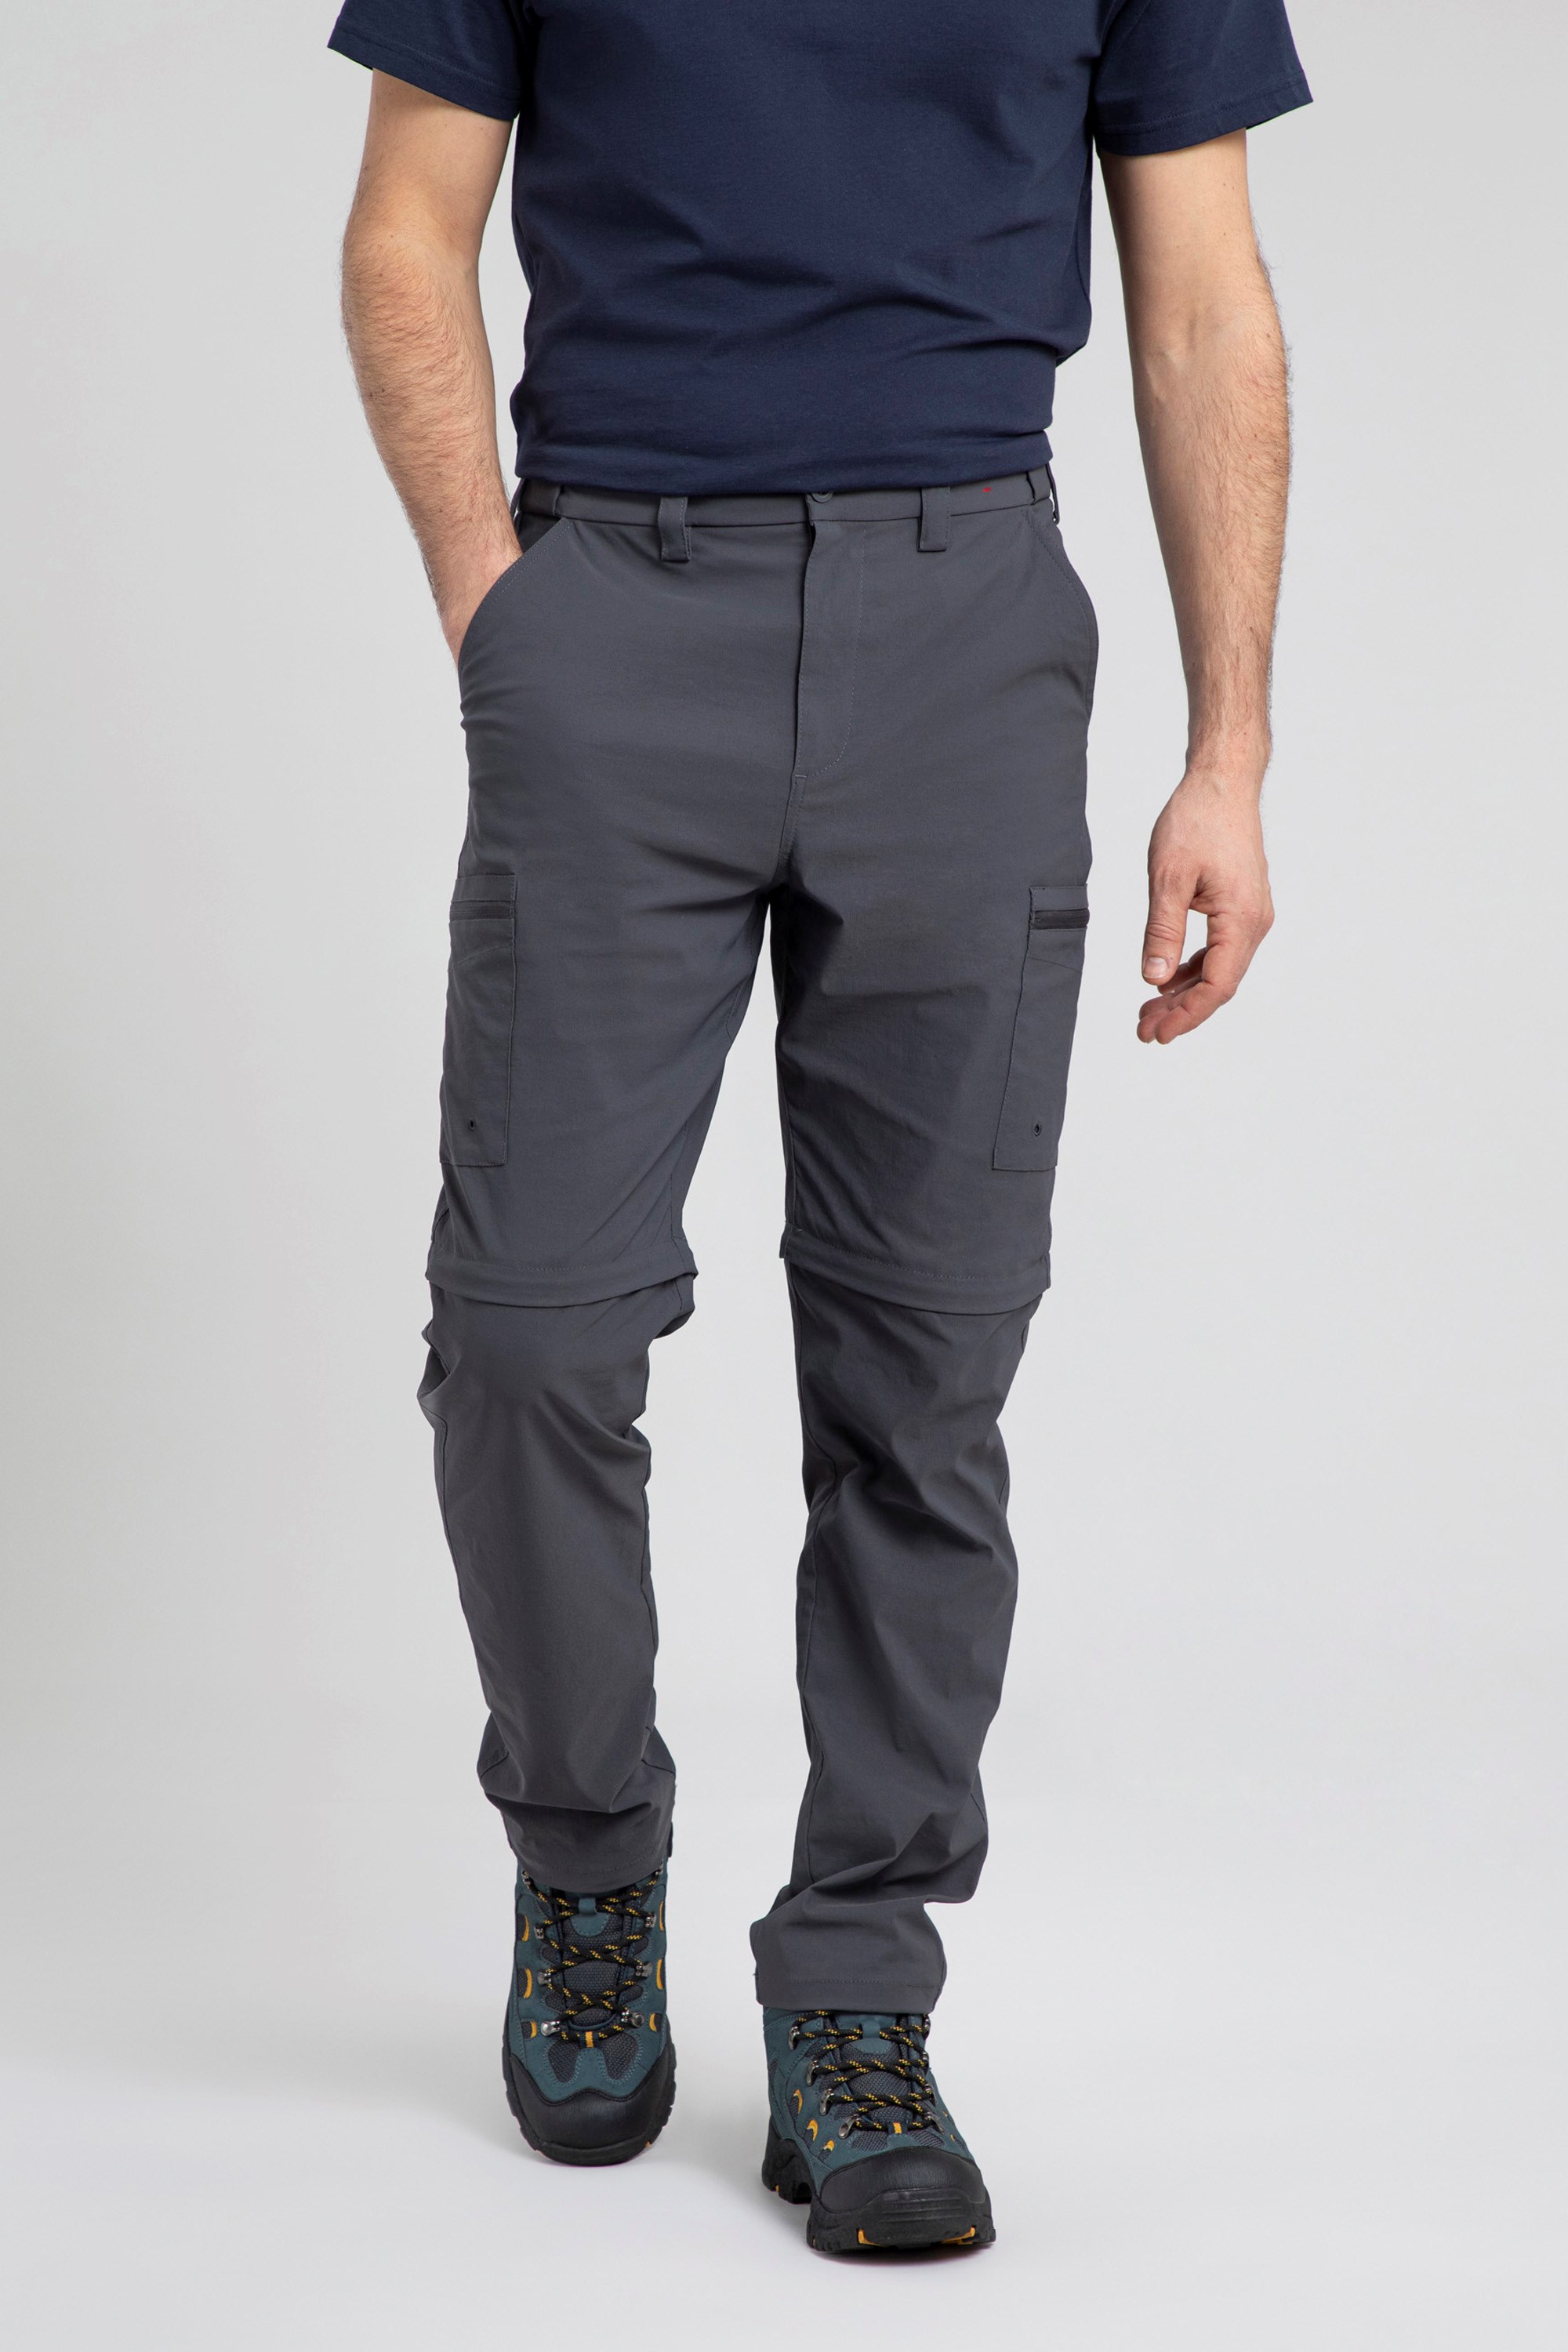 Trek Stretch Convertible Mens Pants - Grey